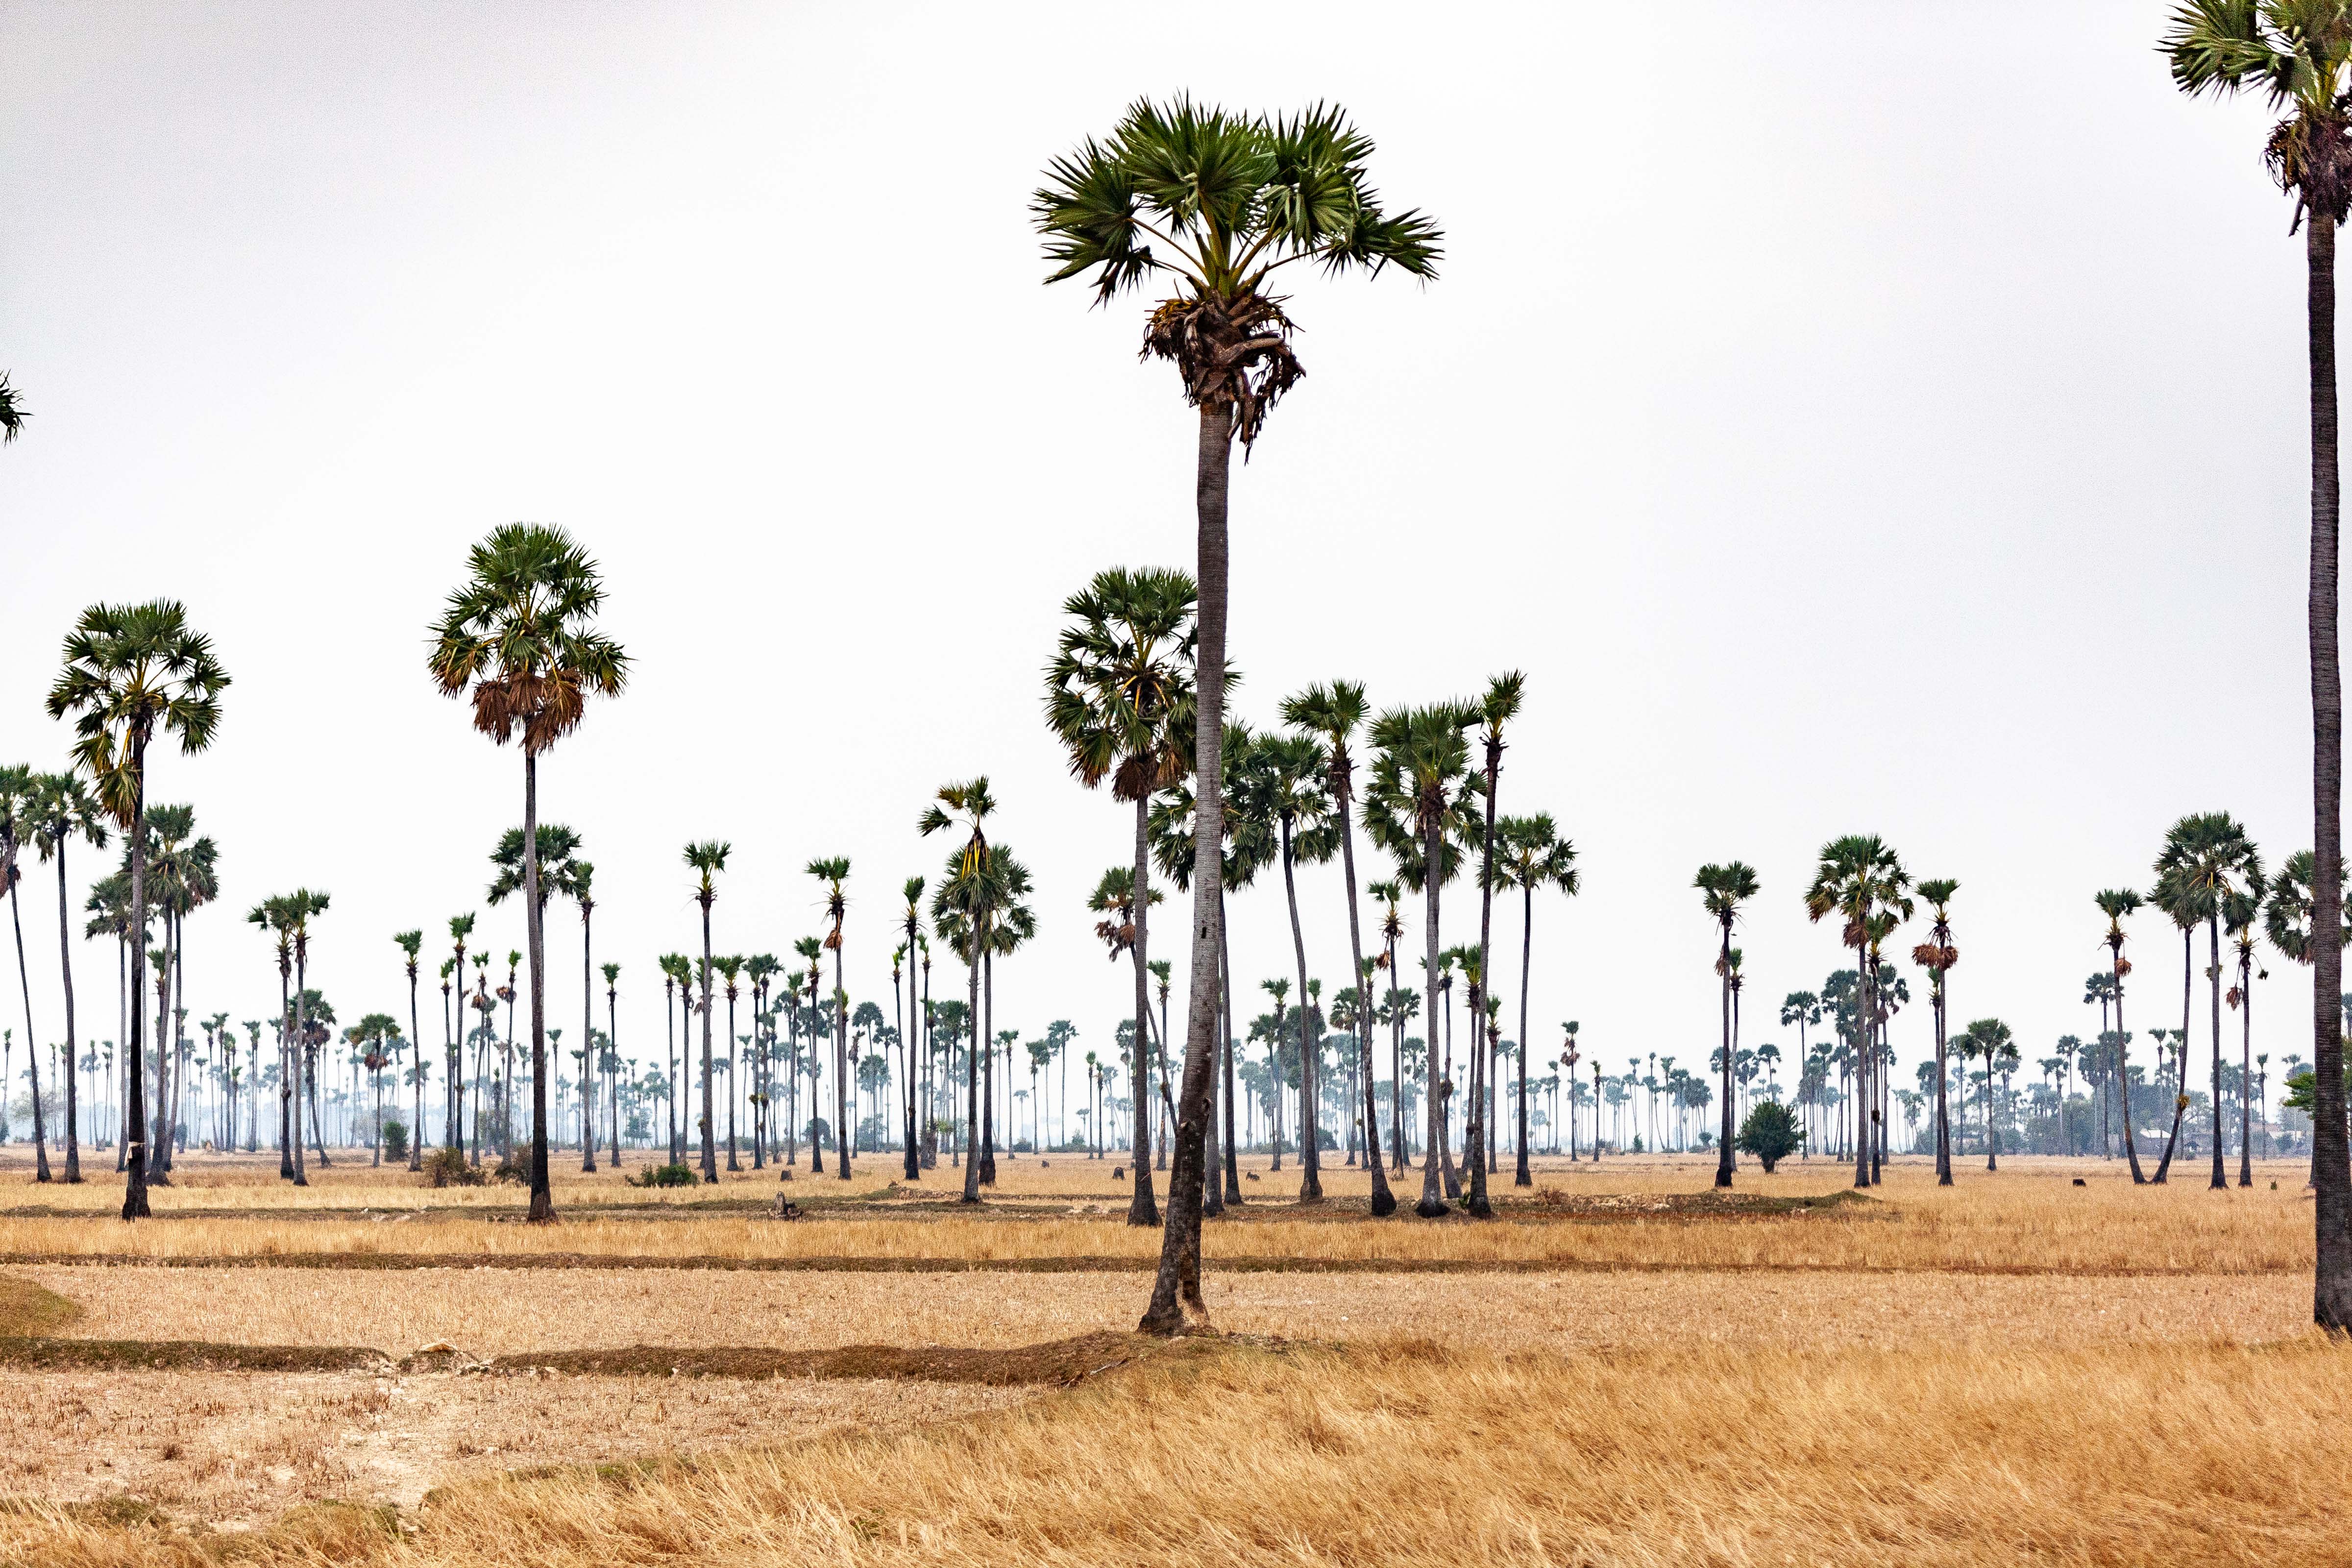 Cambodia, Kampong Chaam Prov, Field Of Palms, 2010, IMG 5583